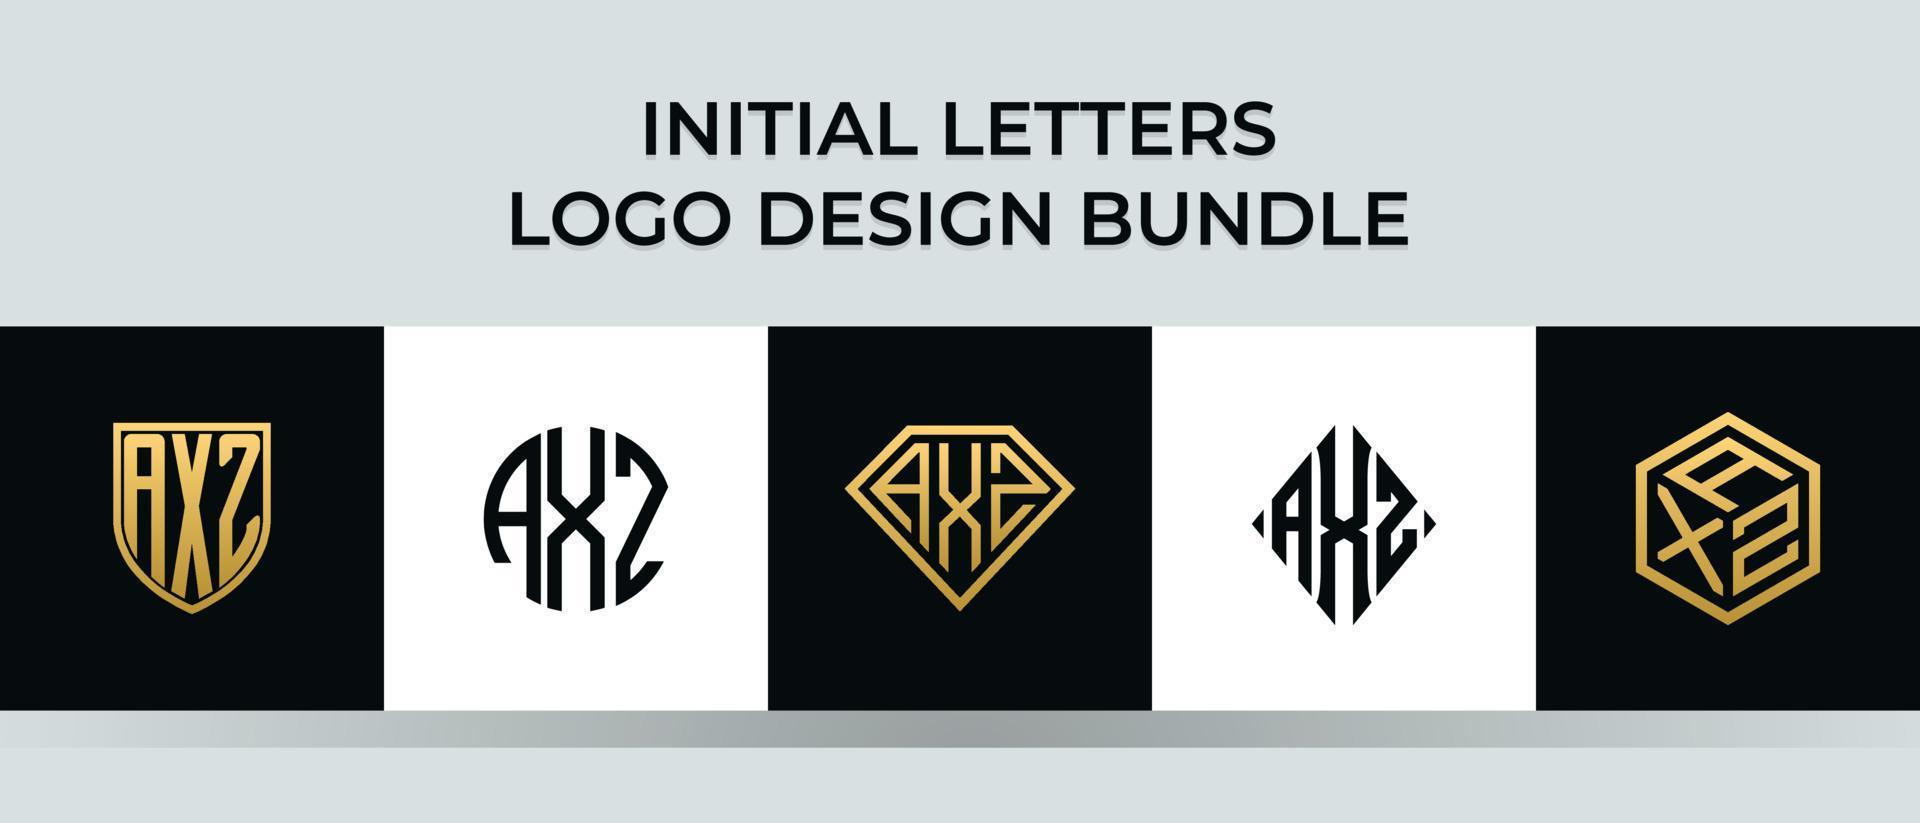 Anfangsbuchstaben axz Logo Designs Bundle vektor